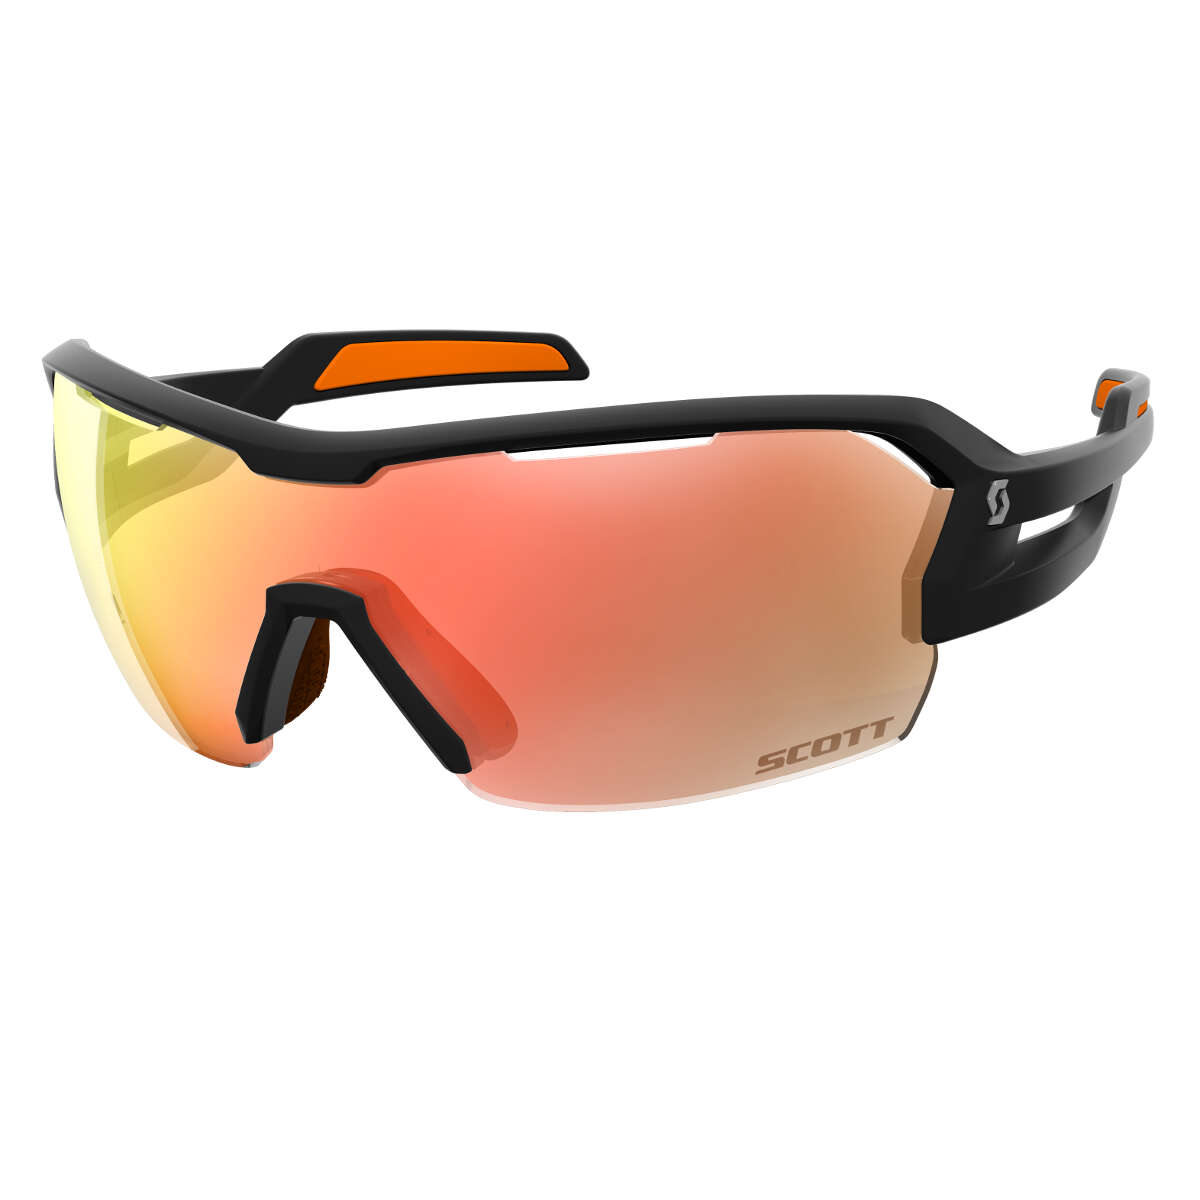 Scott Sport Glasses Spur Matte Black/Orange - Red Chrome Amplifier